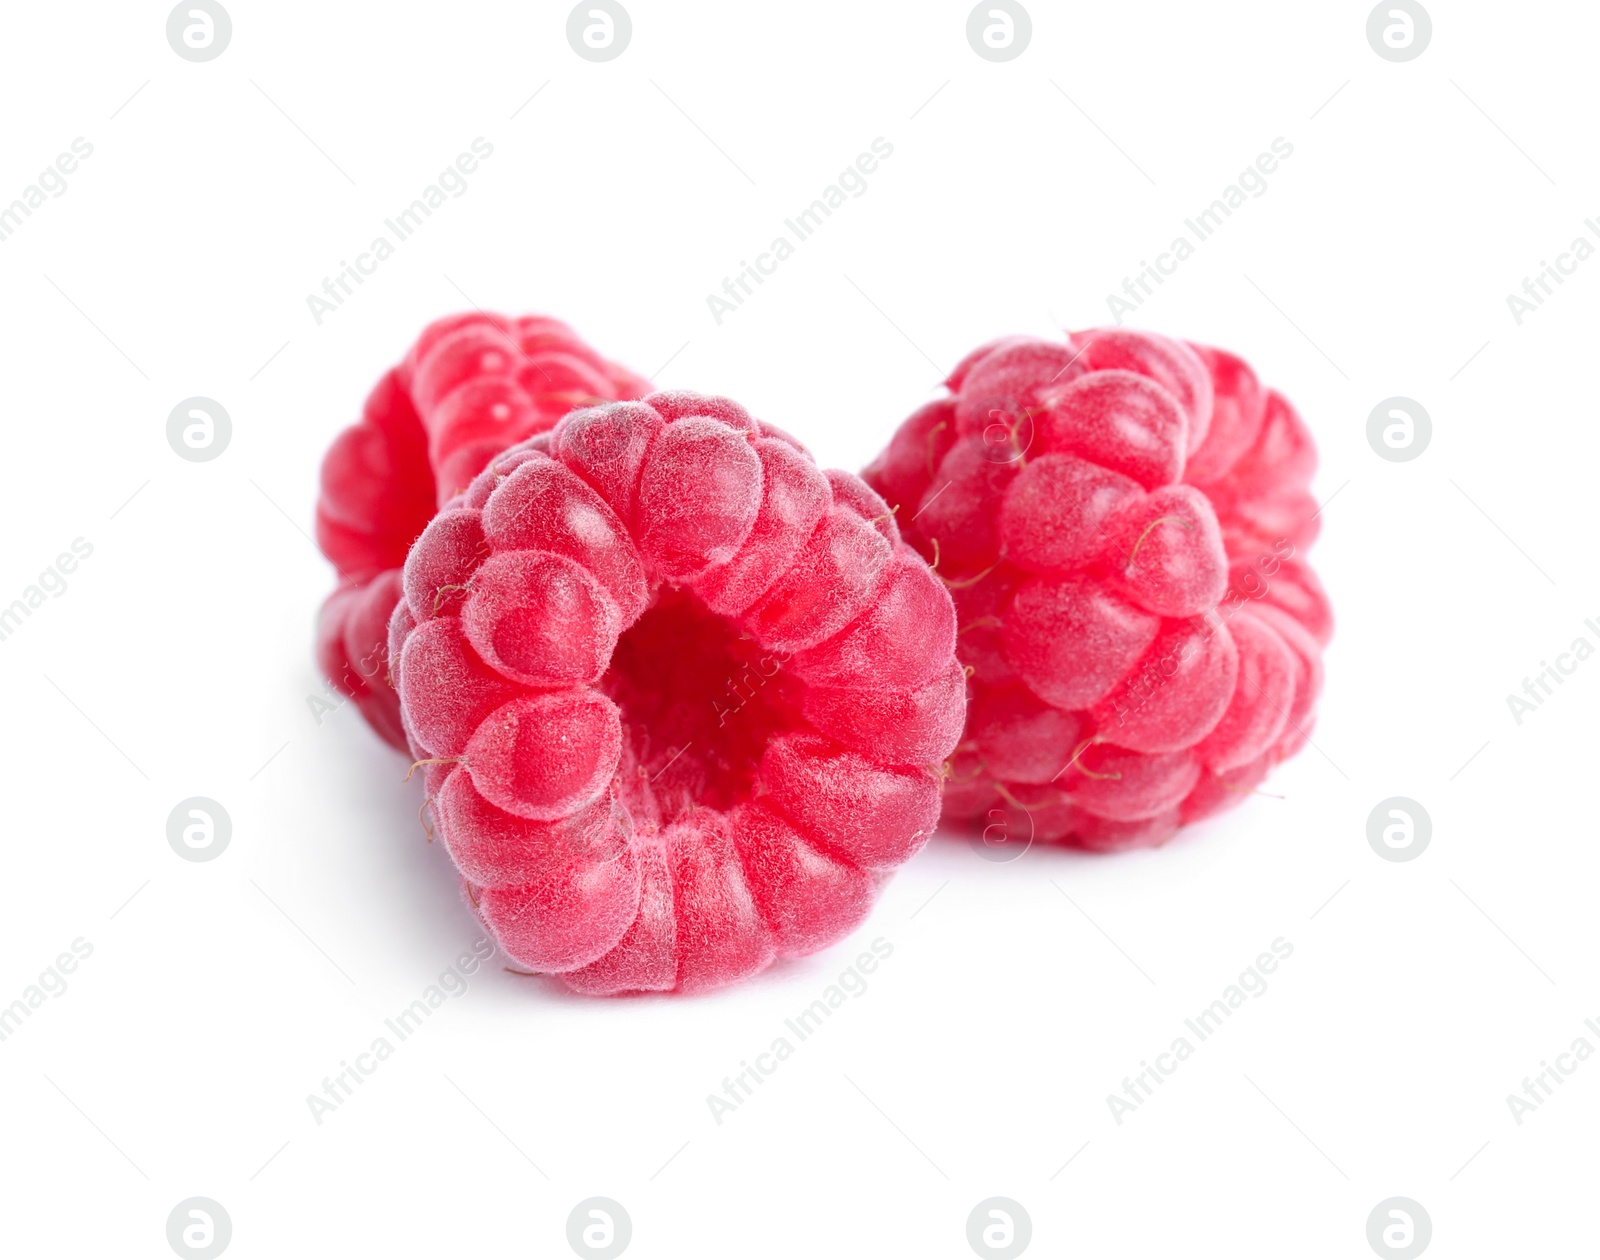 Photo of Fresh red ripe raspberries on white background